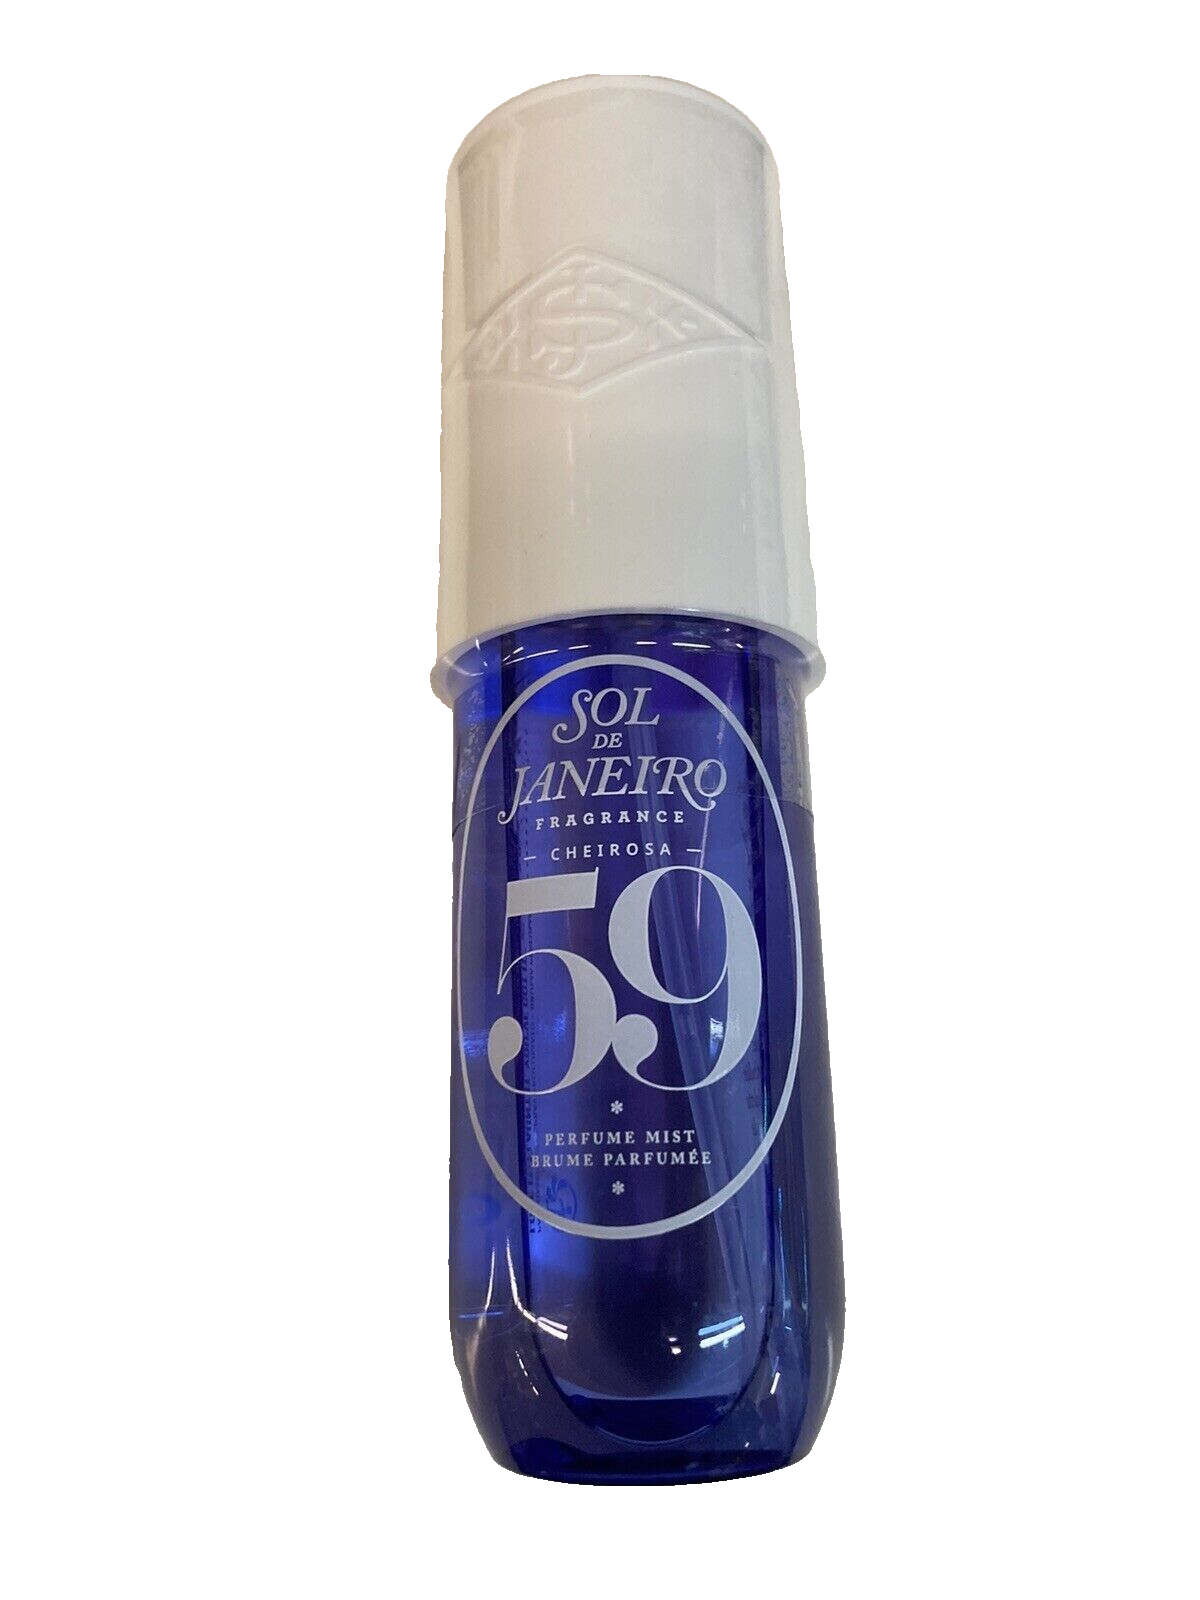 Sol de Janeiro Cheirosa 59 Perfume Mist 3.04 oz / 90 mL BRAND NEW